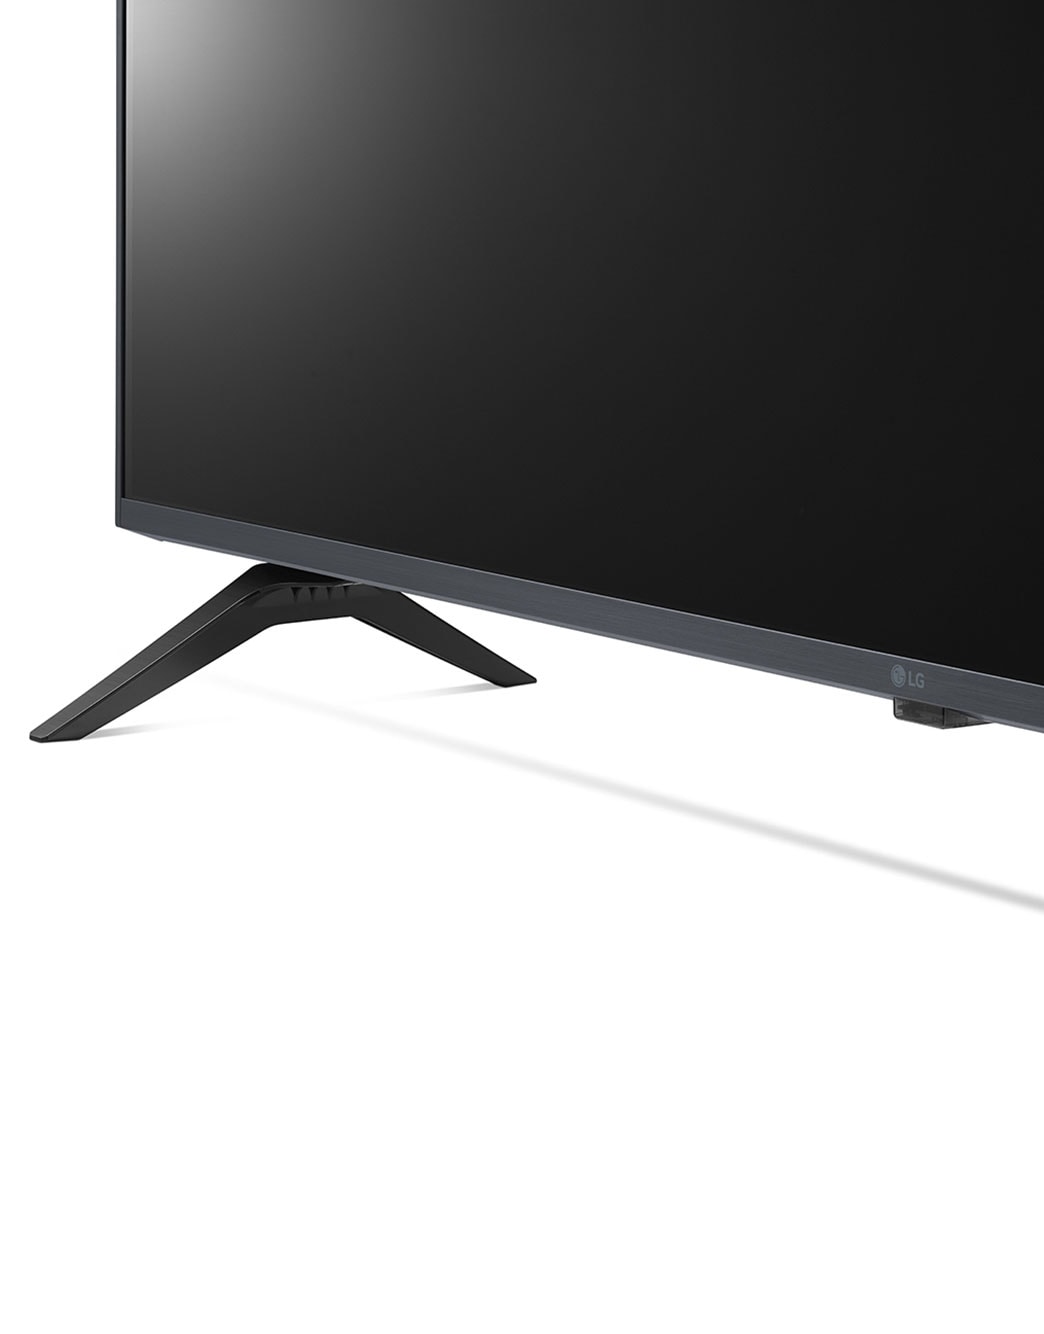 Smart Tv LG Ai Thinq 43up7750psb Lcd 4k 43 100v/240v